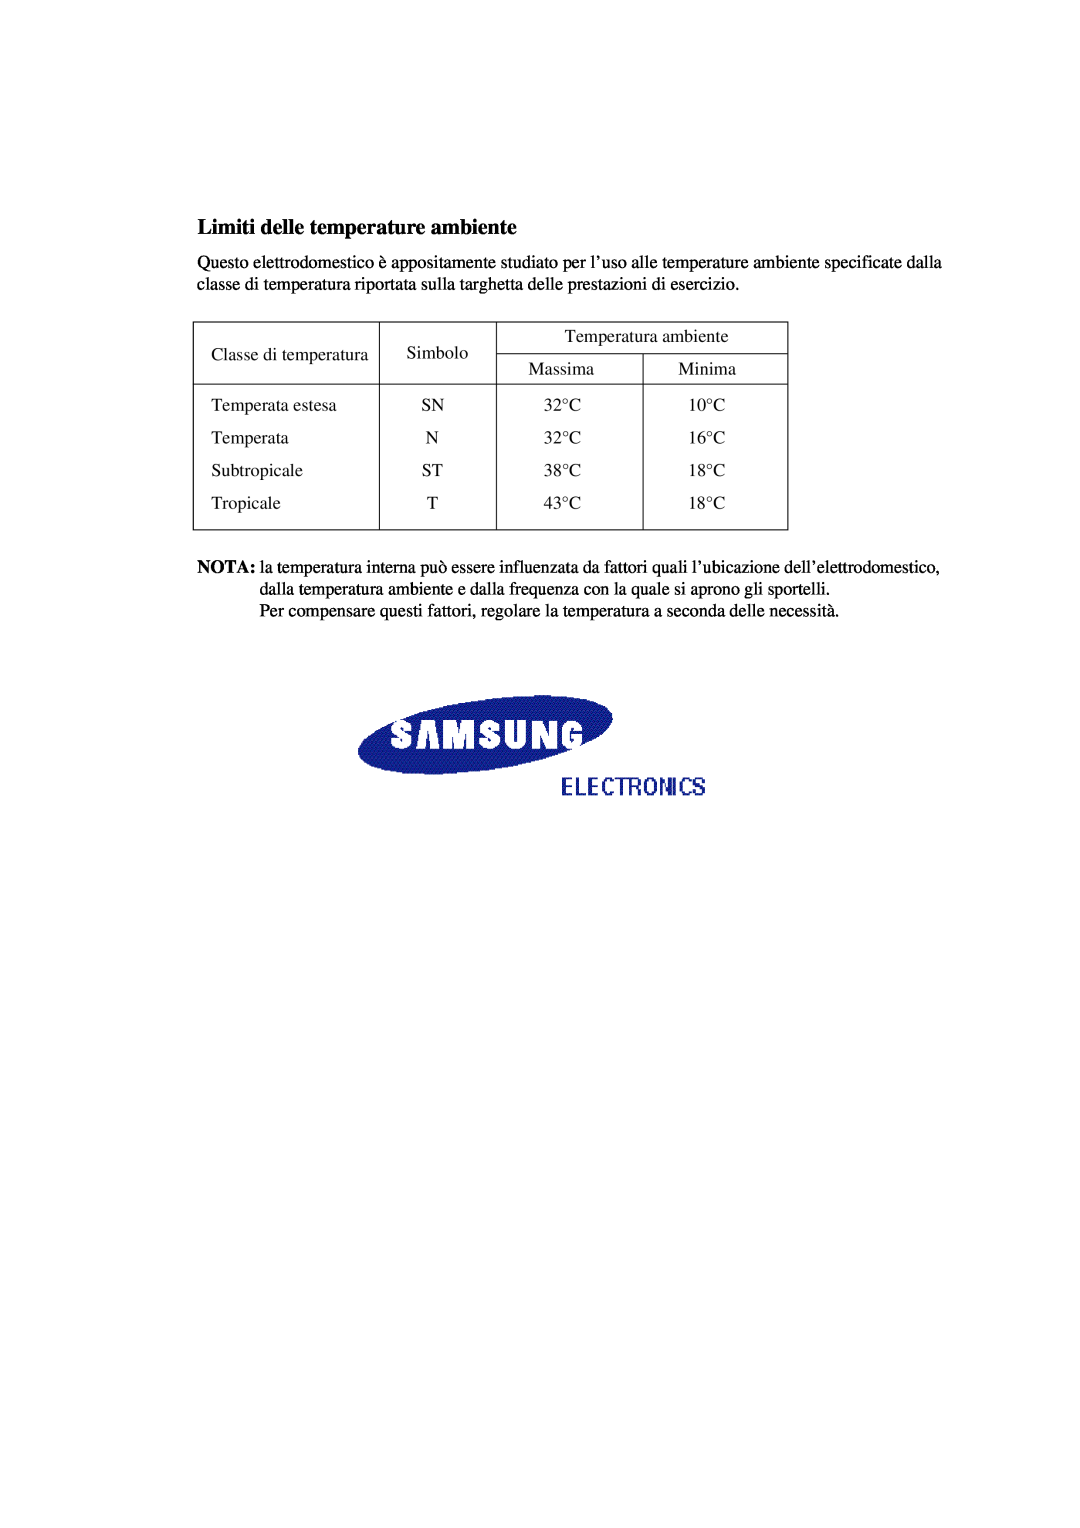 Samsung SS20XS1/XET, SS20WH1/XEU, SS20WG1/AMF, SS20XM2/XEU, SS20XR2/XET, SS20WG2/XEF manual Limiti delle temperature ambiente 